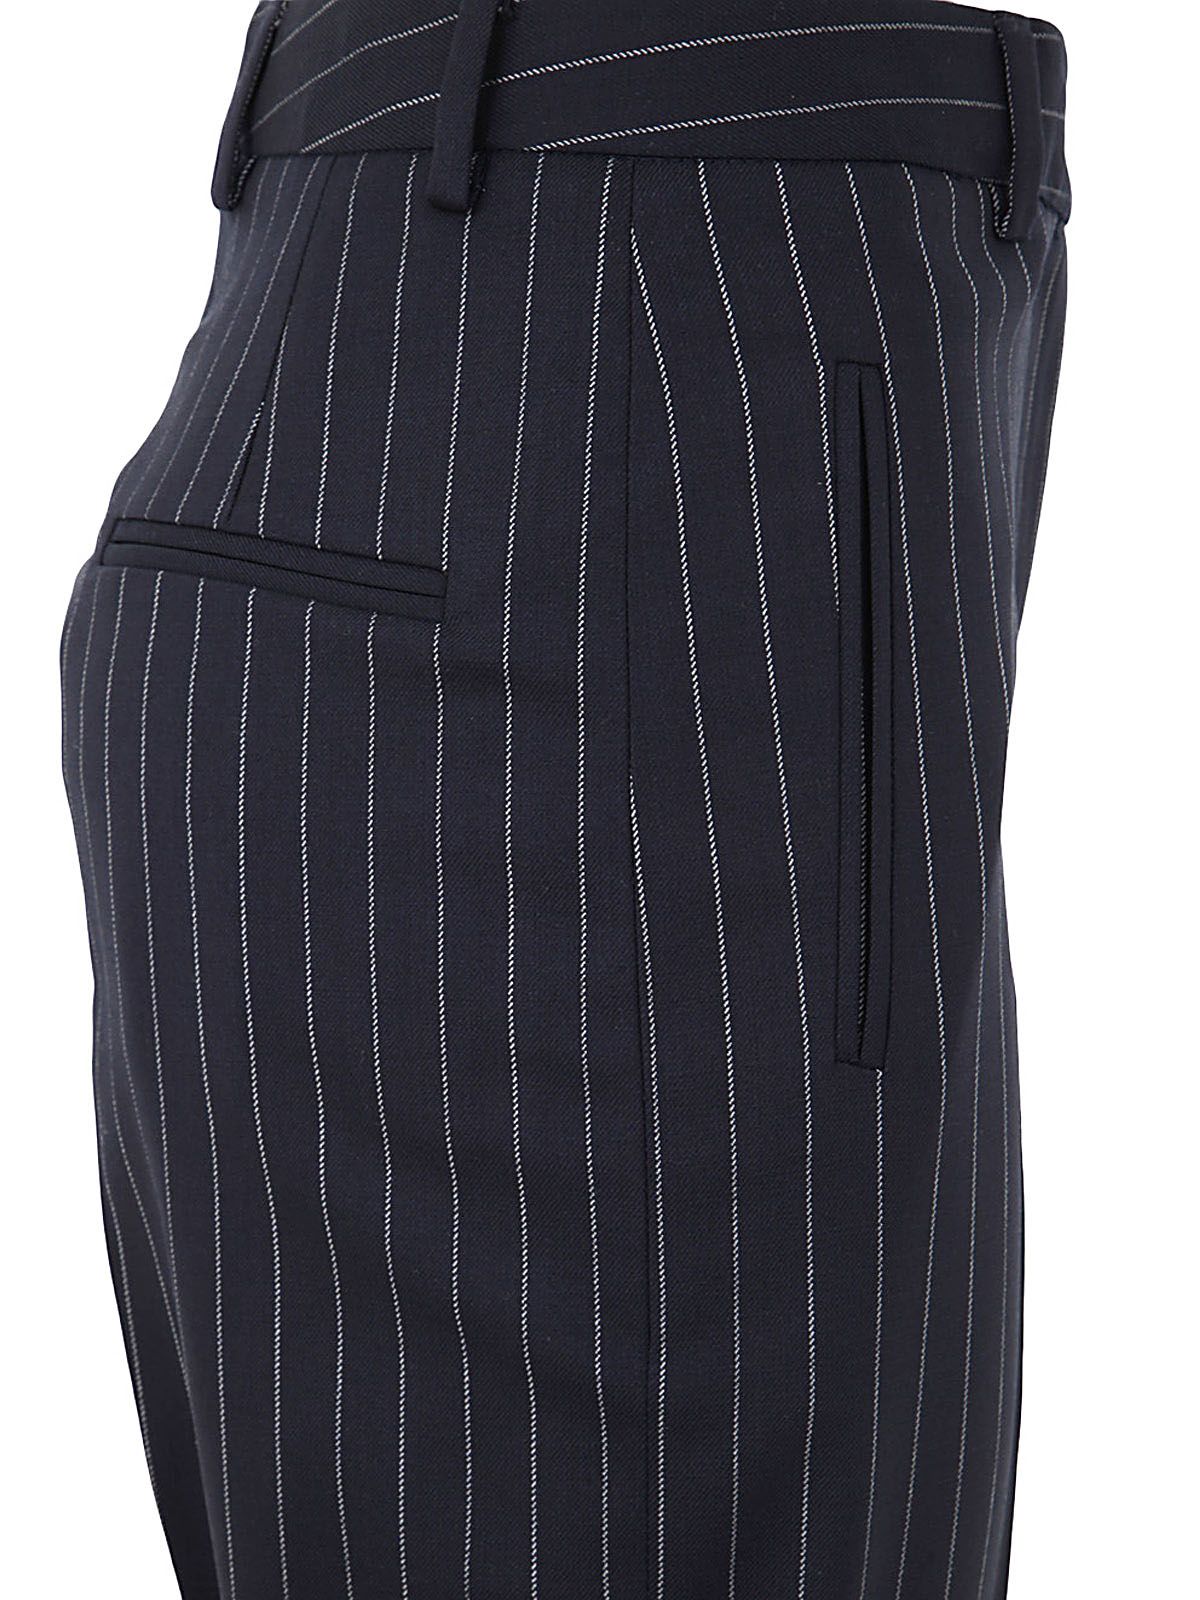 Shop Alberto Biani 's High-waisted Pinstripe Trousers Bernardellistores. Com